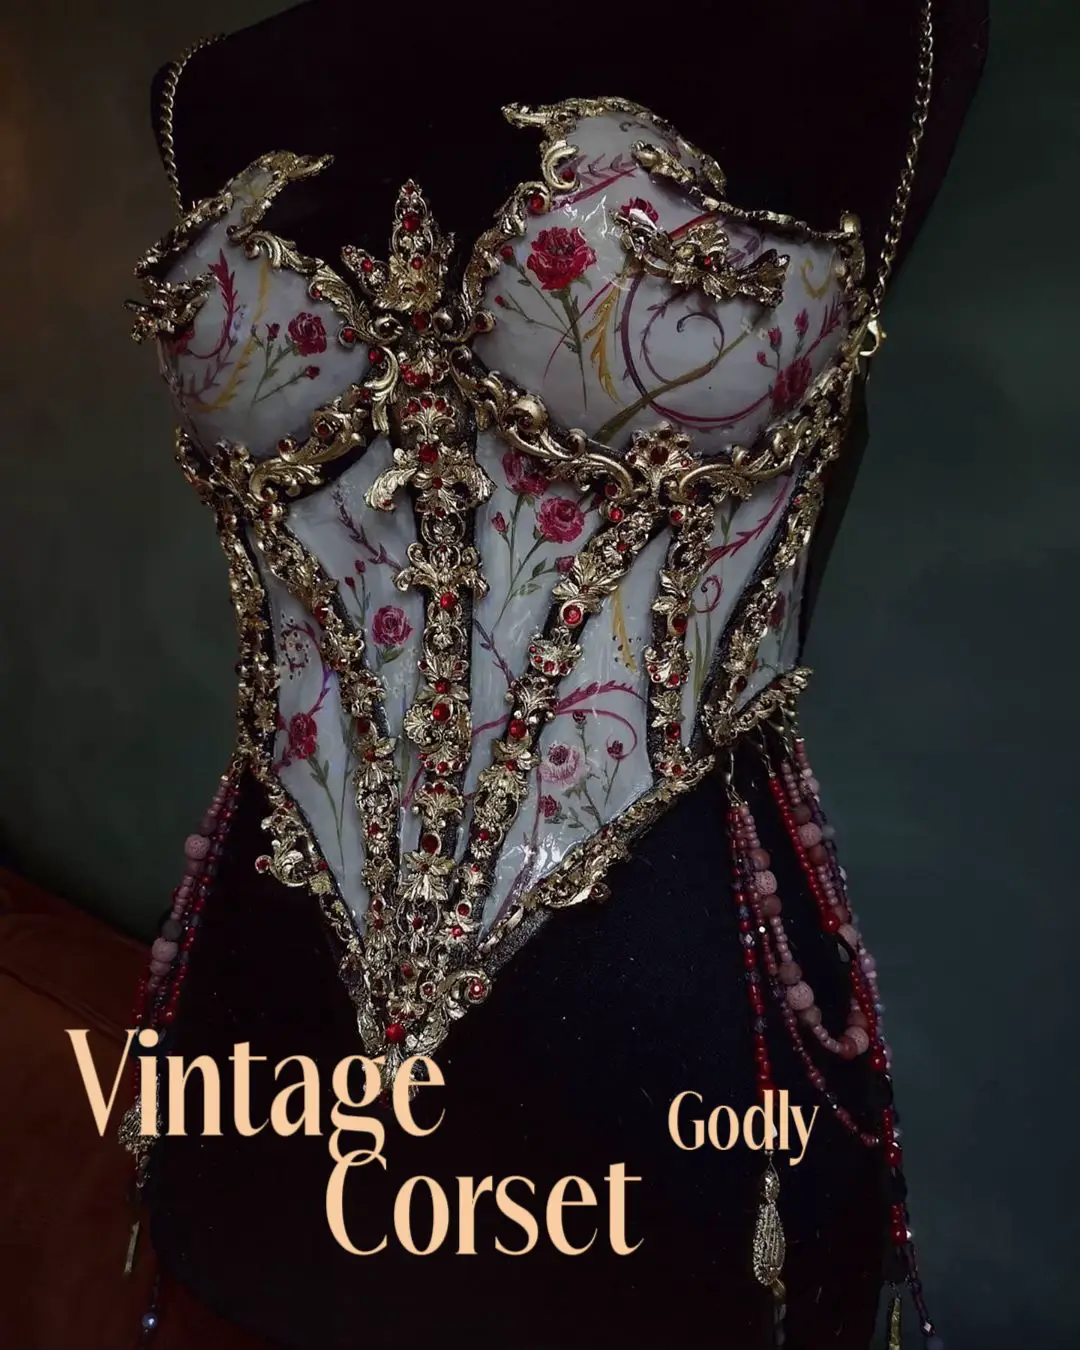 Vintage La Perla halter neck corset with flowers details at